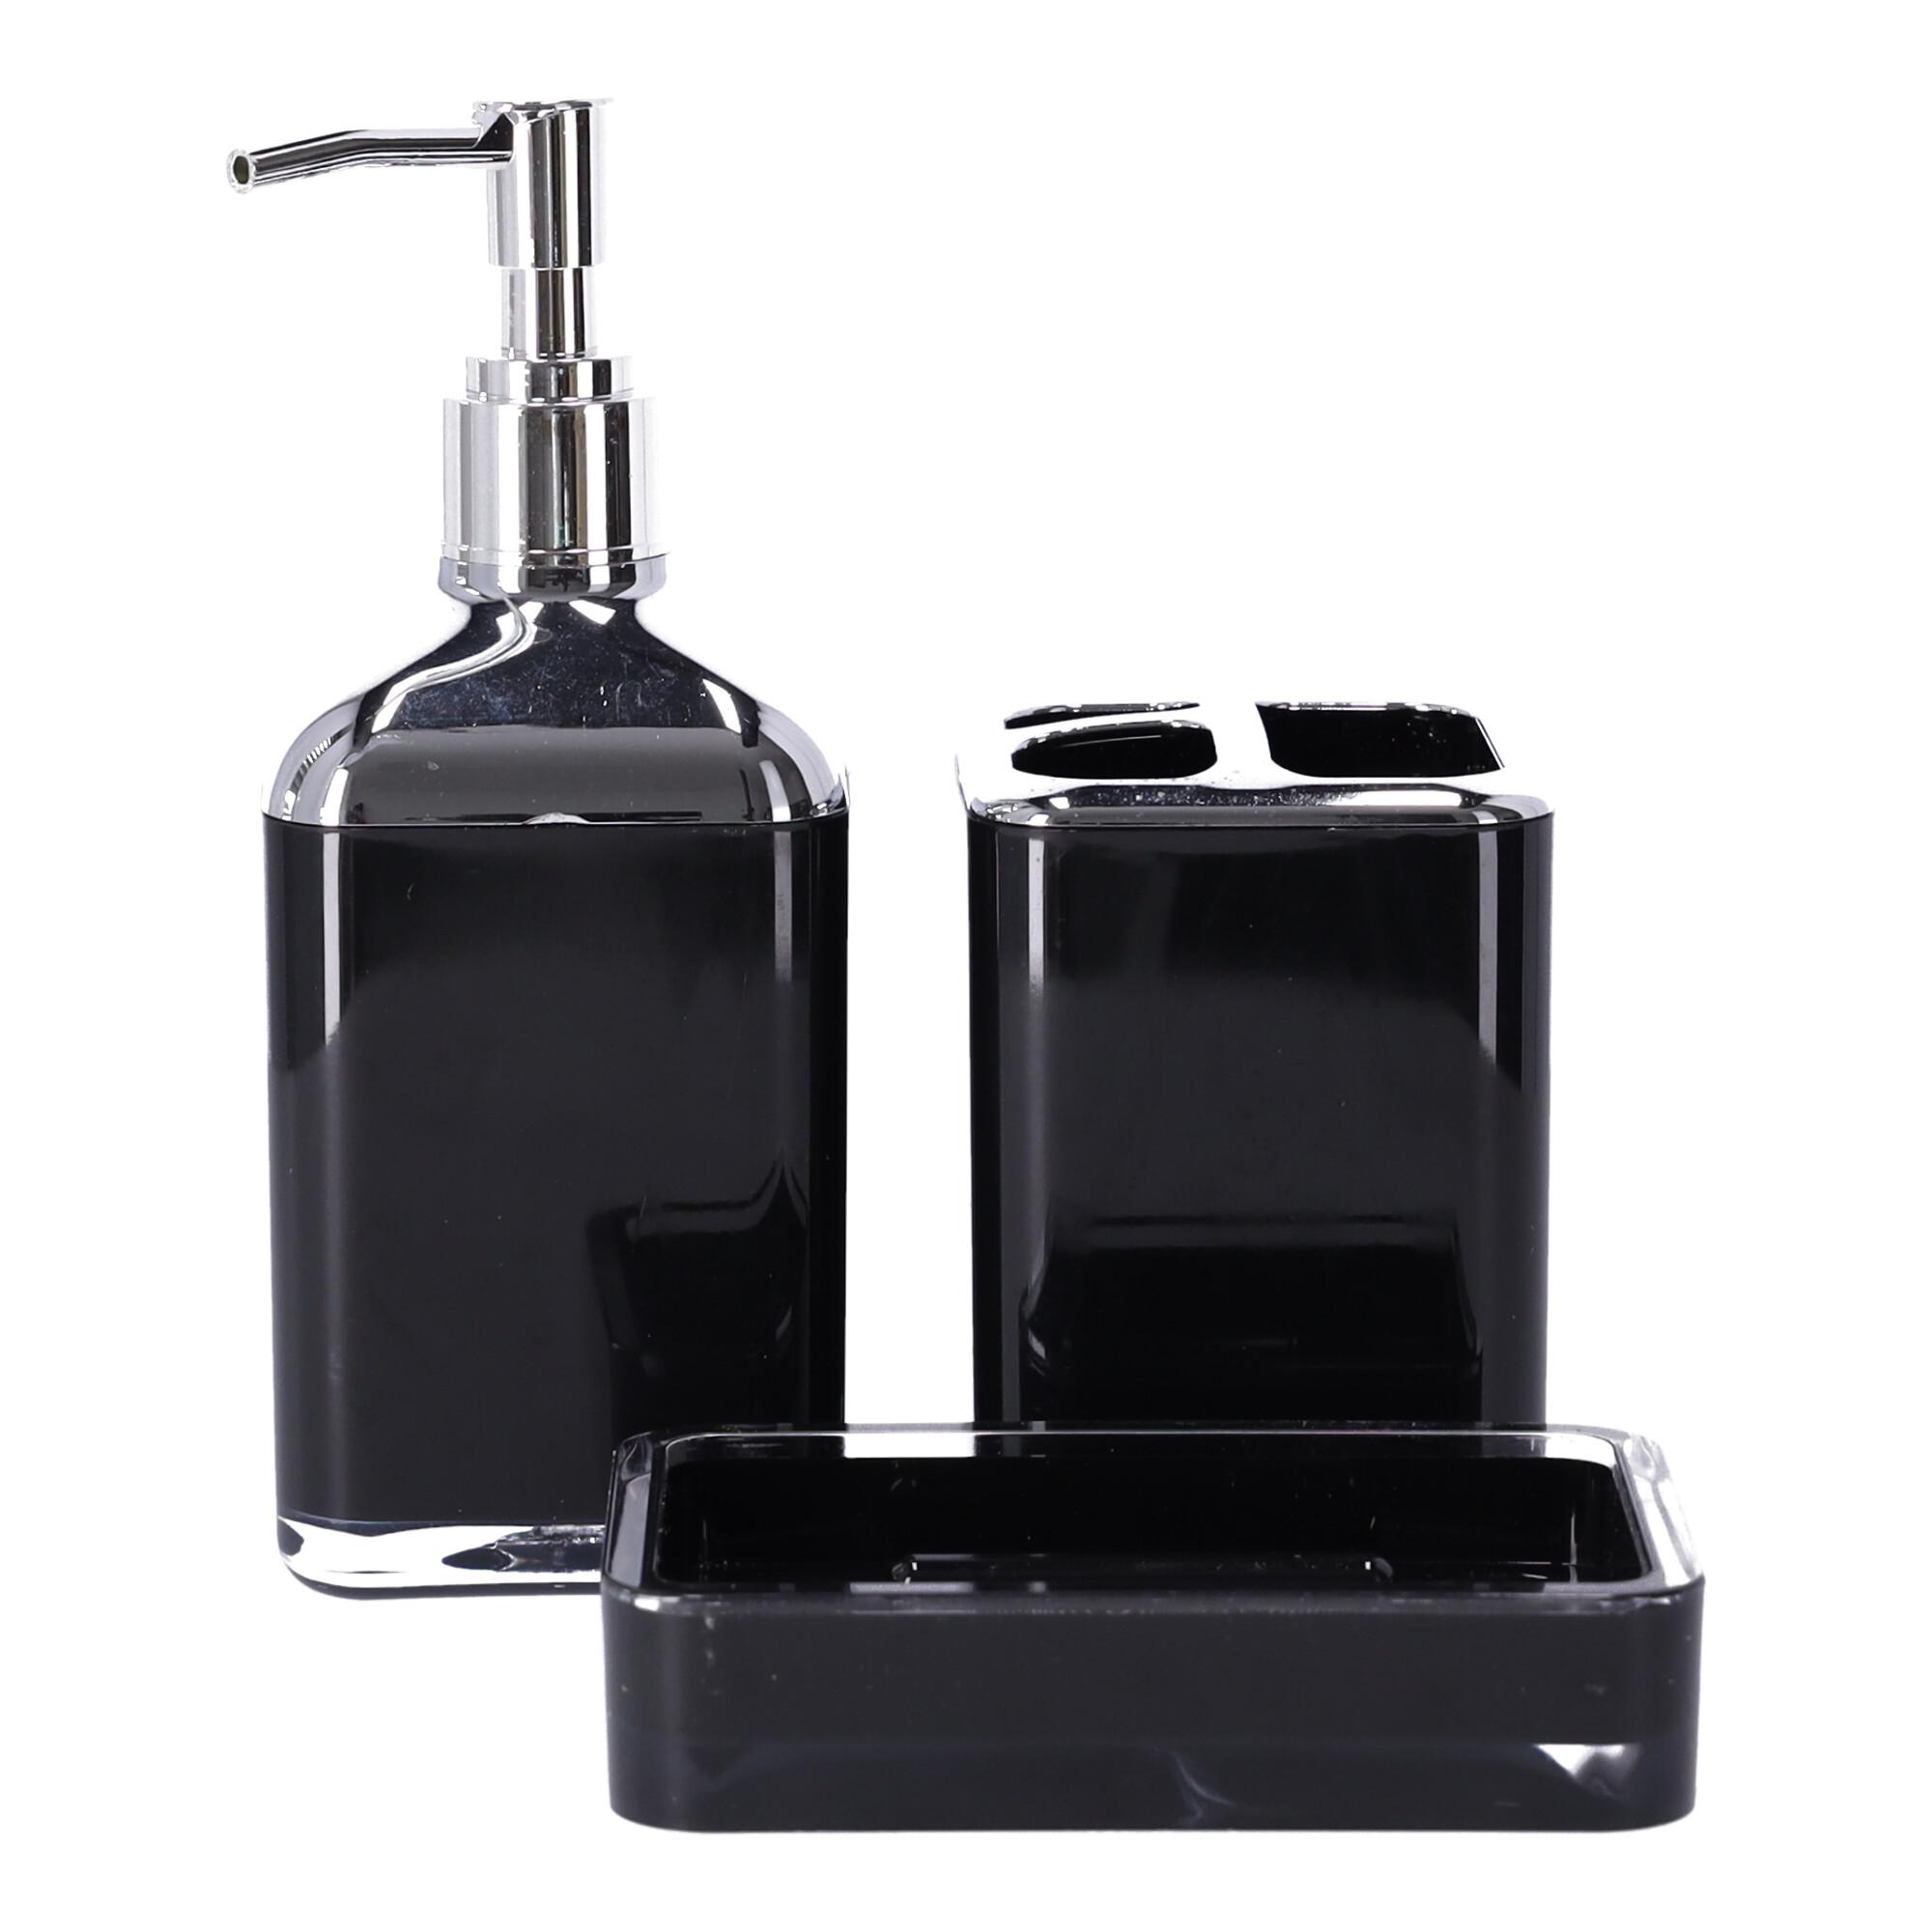 Bathroom accessories set of 3 items BERRETTI, black + chrome